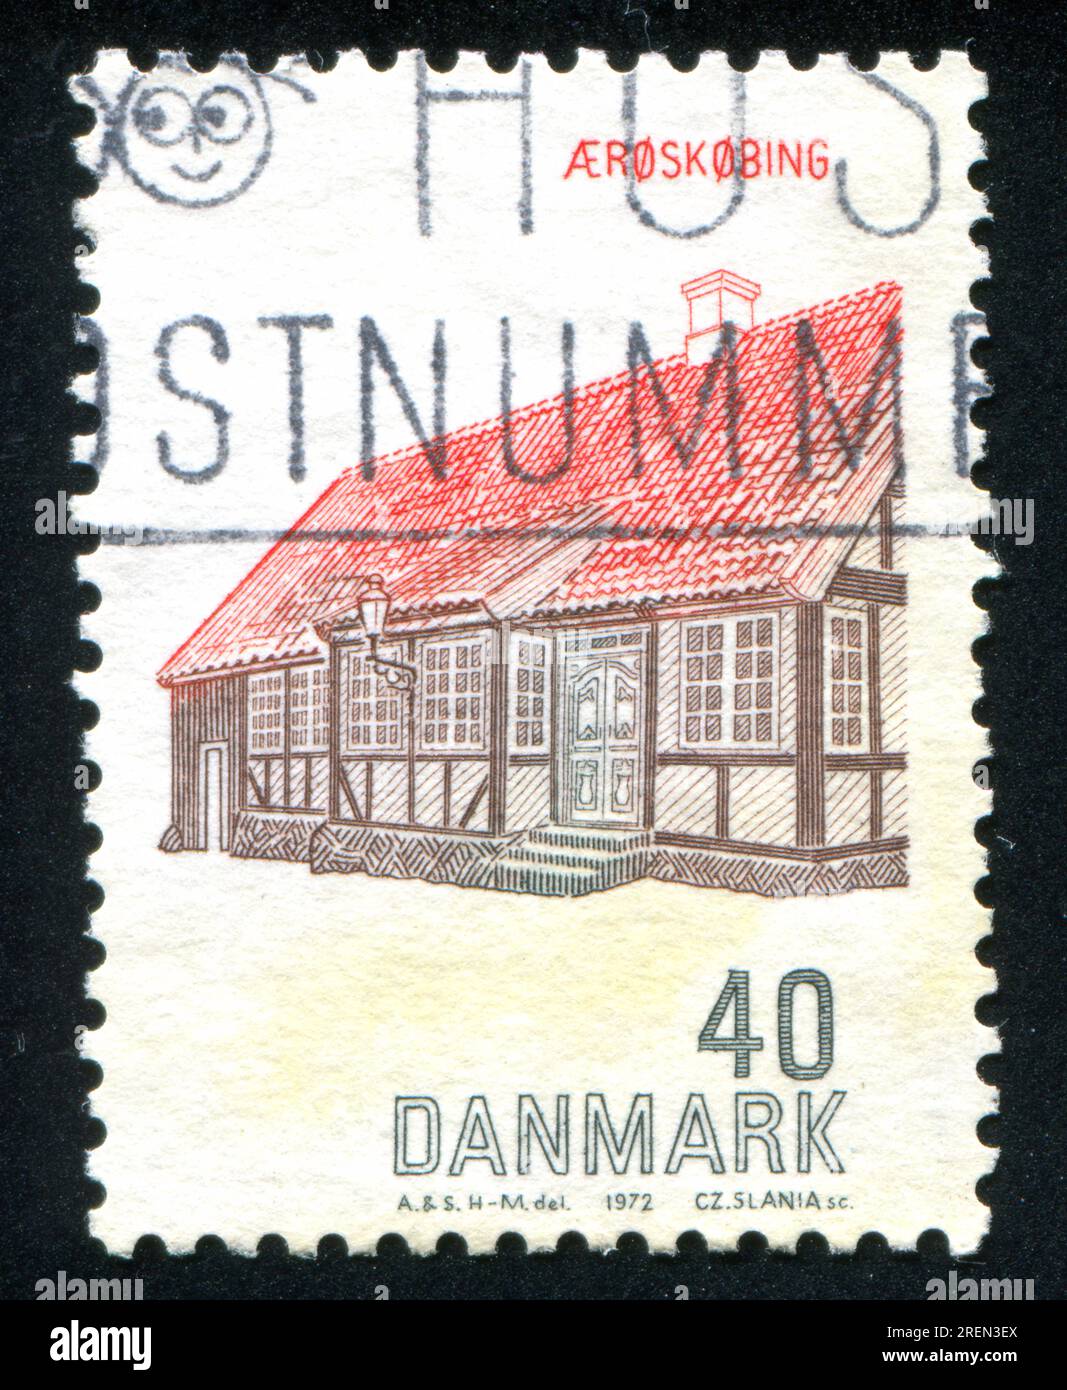 DÄNEMARK - CIRCA 1972: Stempel gedruckt von Dänemark, zeigt Aeroskobing House, circa 1972 Stockfoto